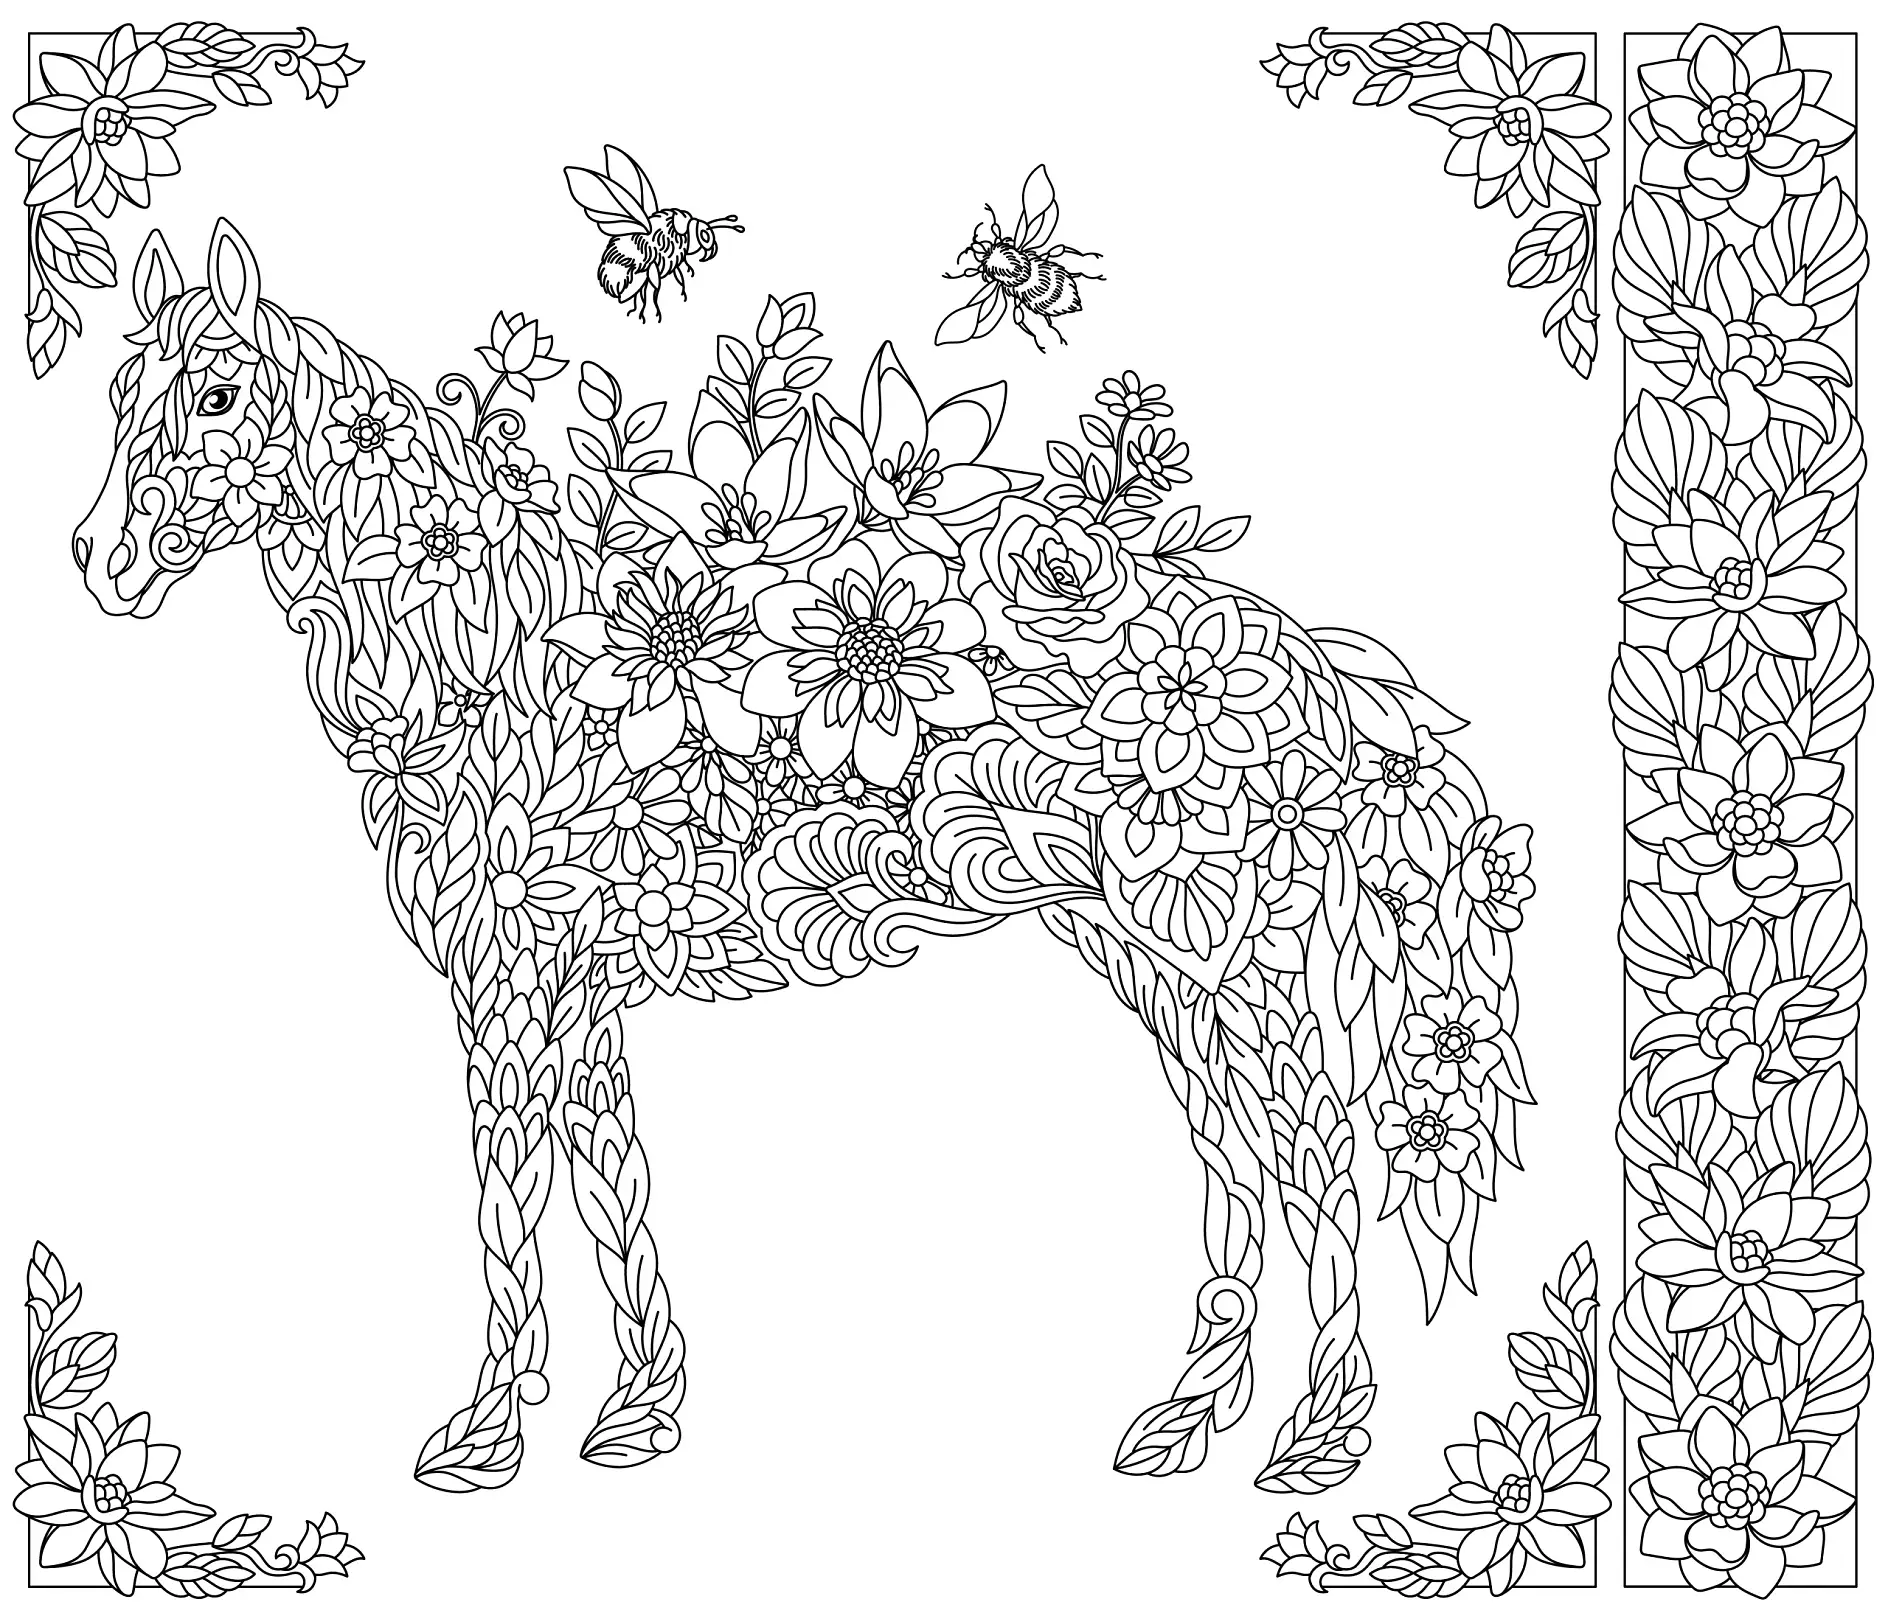 Ausmalbild Mandala mit Pferd und floralen Bordüren